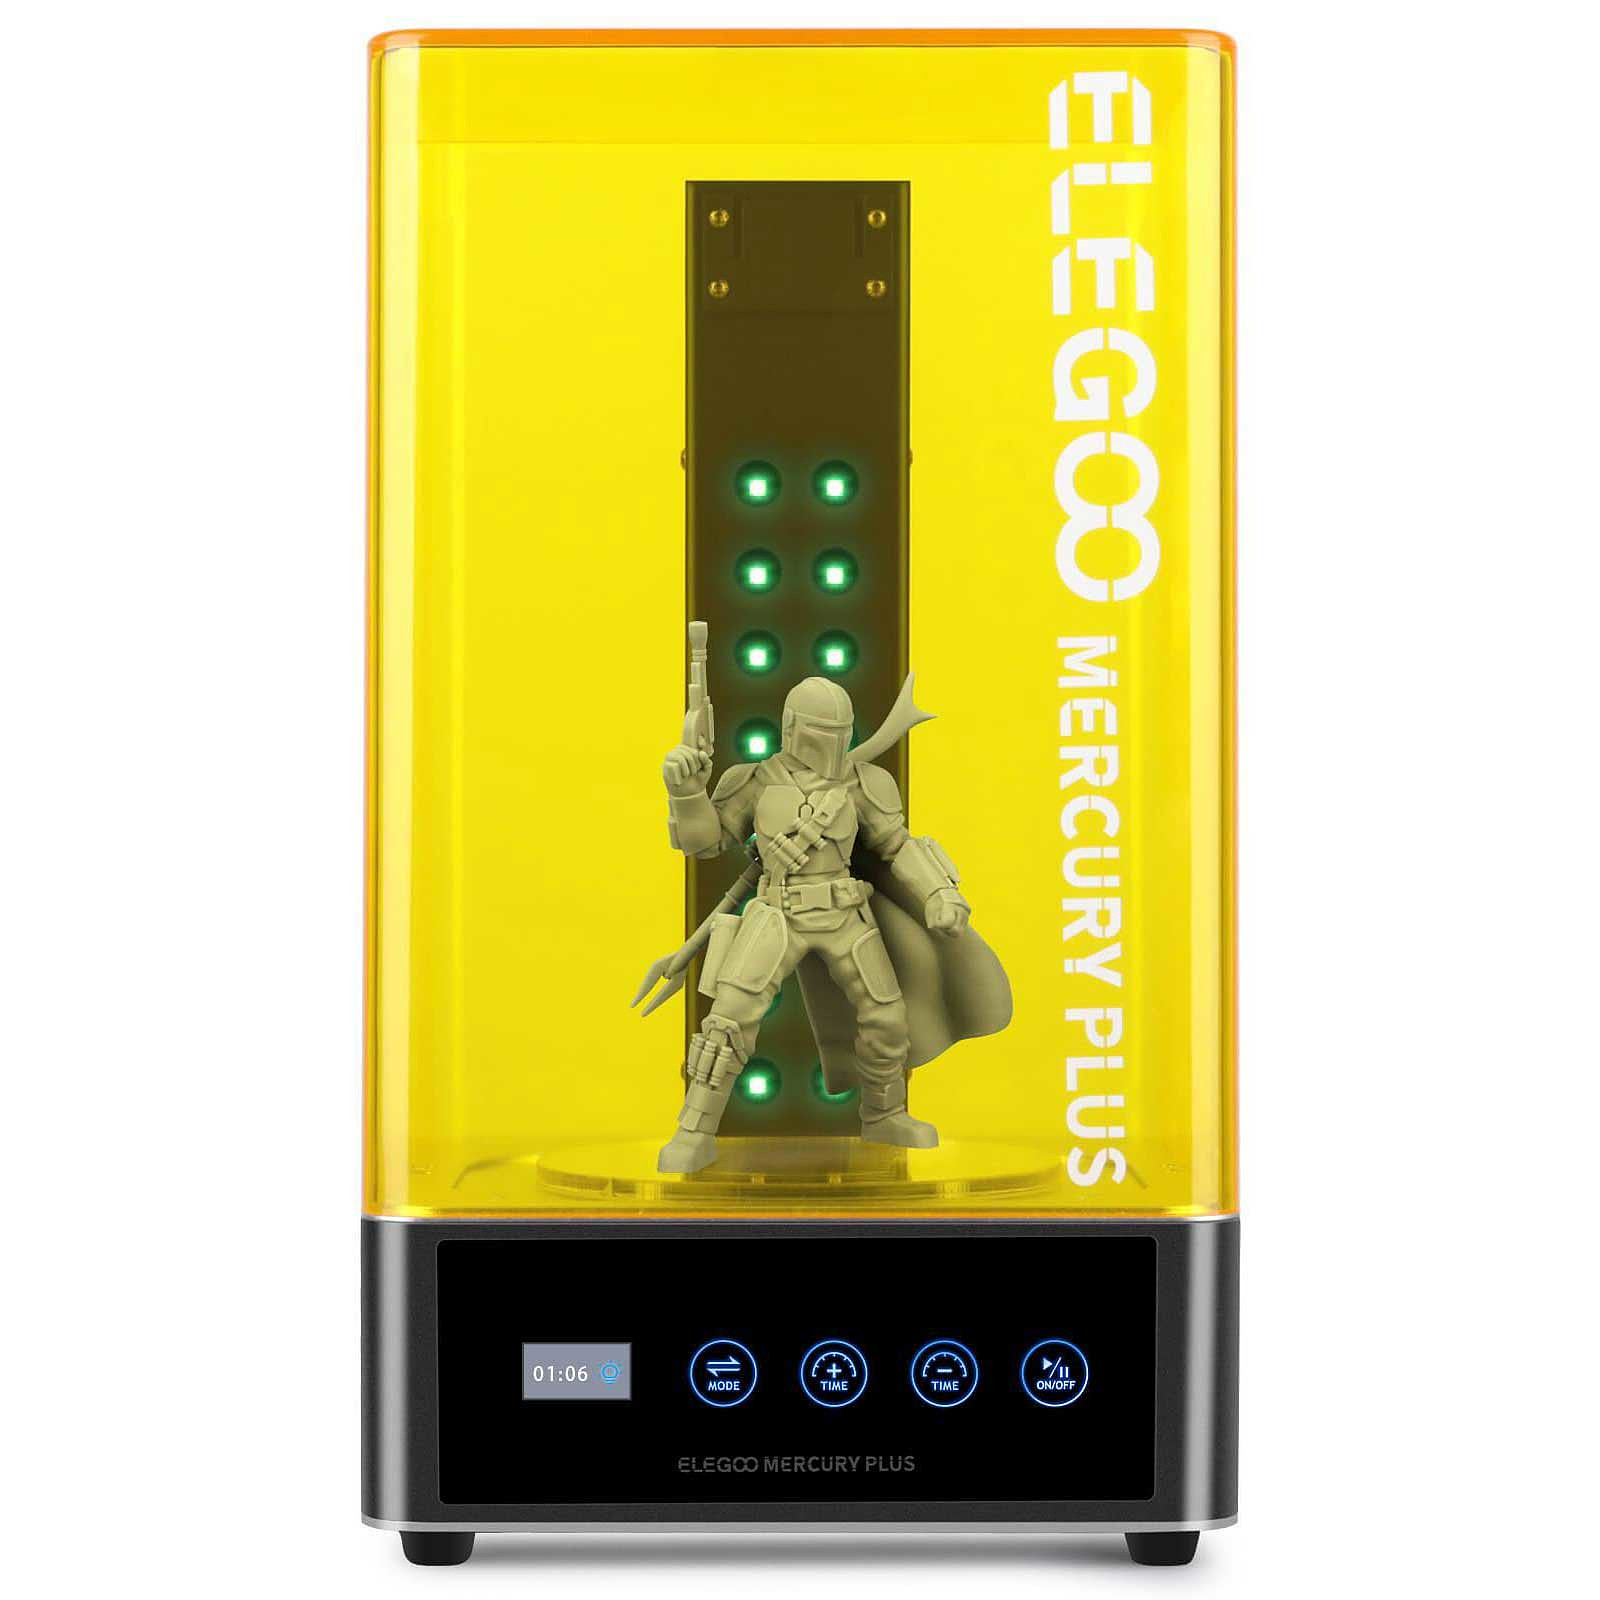 Elegoo Mercury Plus 2.0 - Imprimante 3D Elegoo